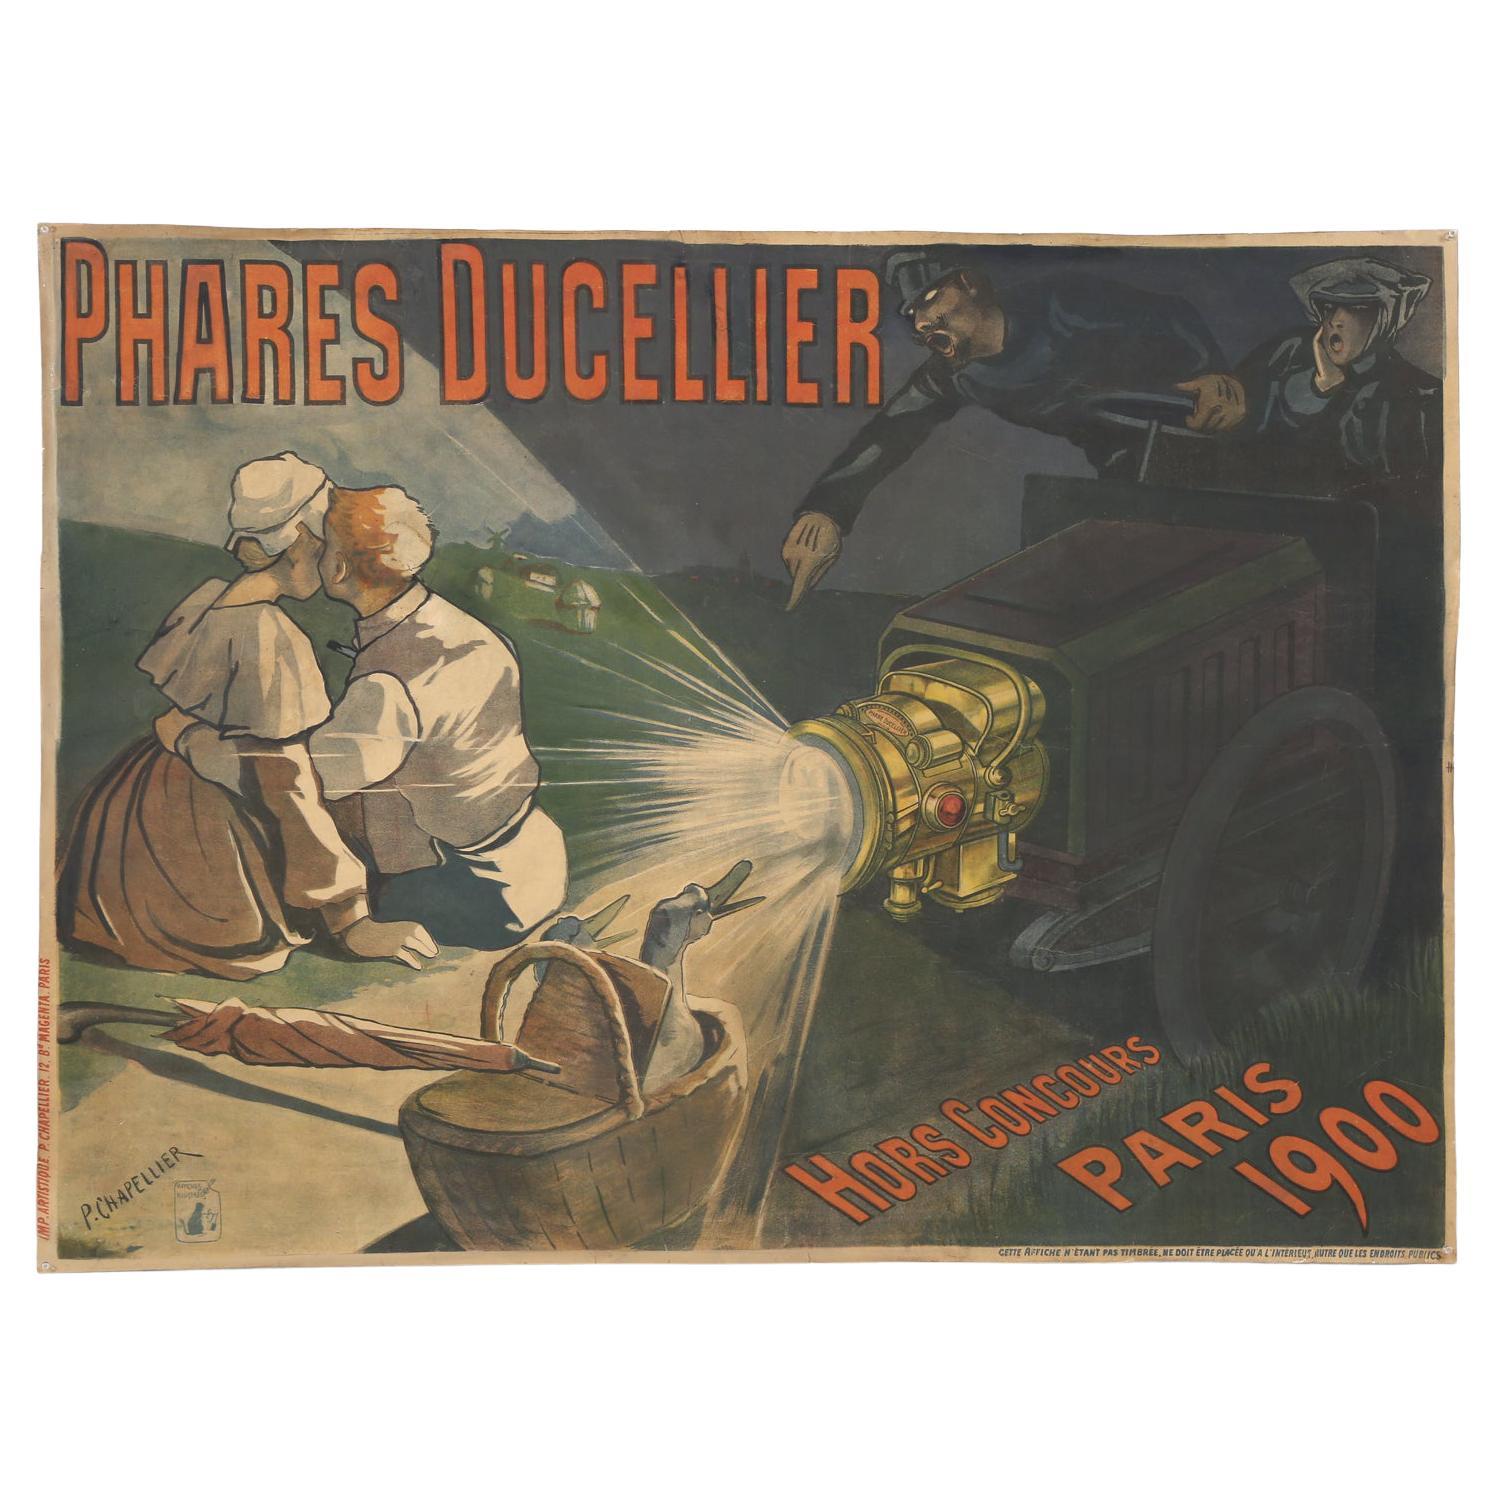 Phares Ducellier Large Original Poster by P. Chappelier, Paris France, 1900 For Sale